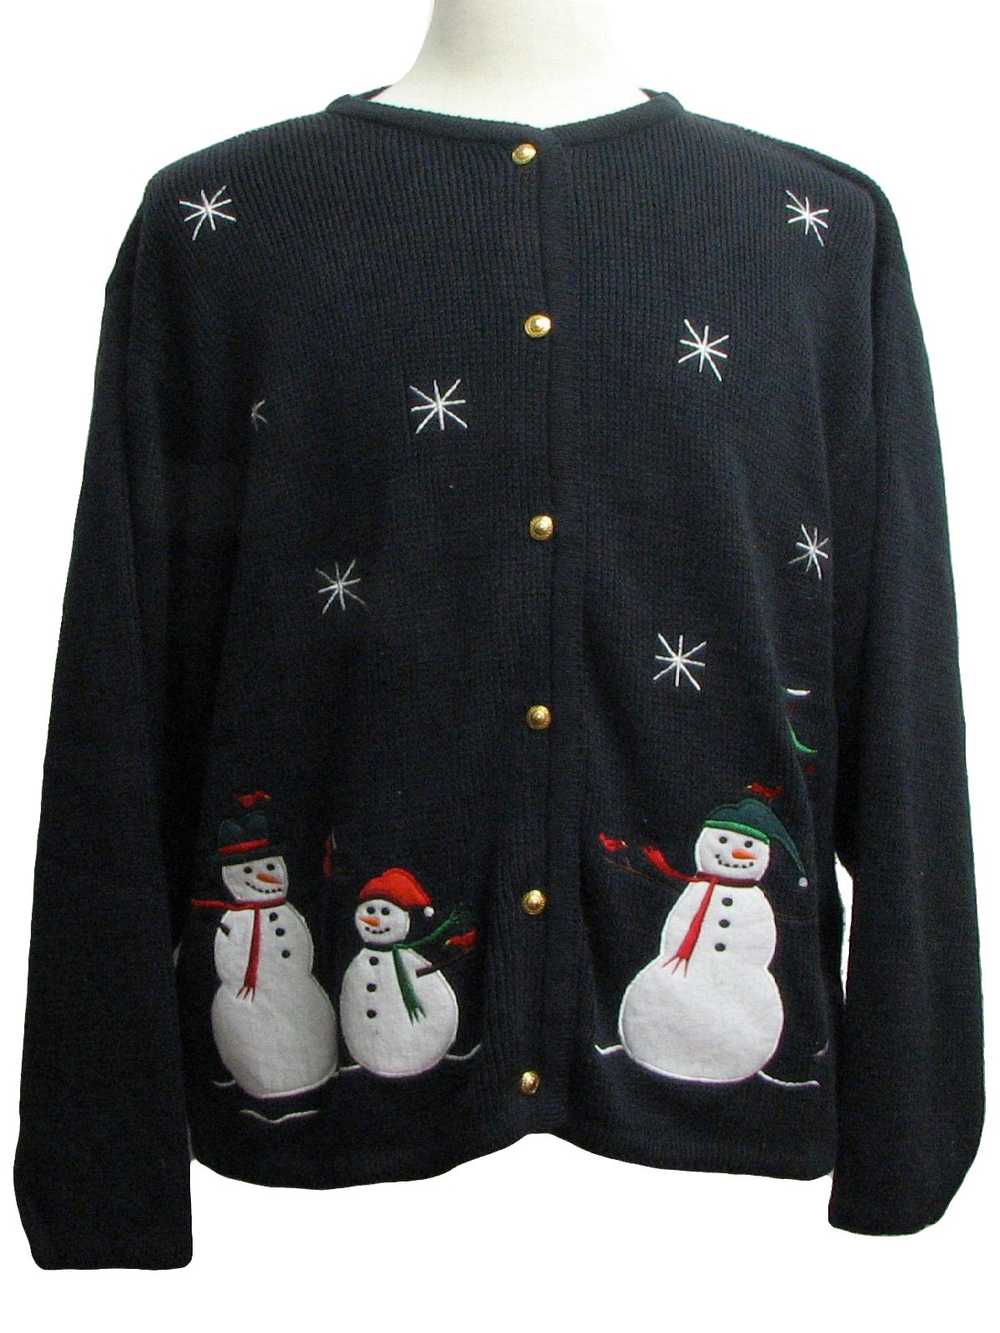 Croft and Barrow Unisex Ugly Christmas Sweater - image 1